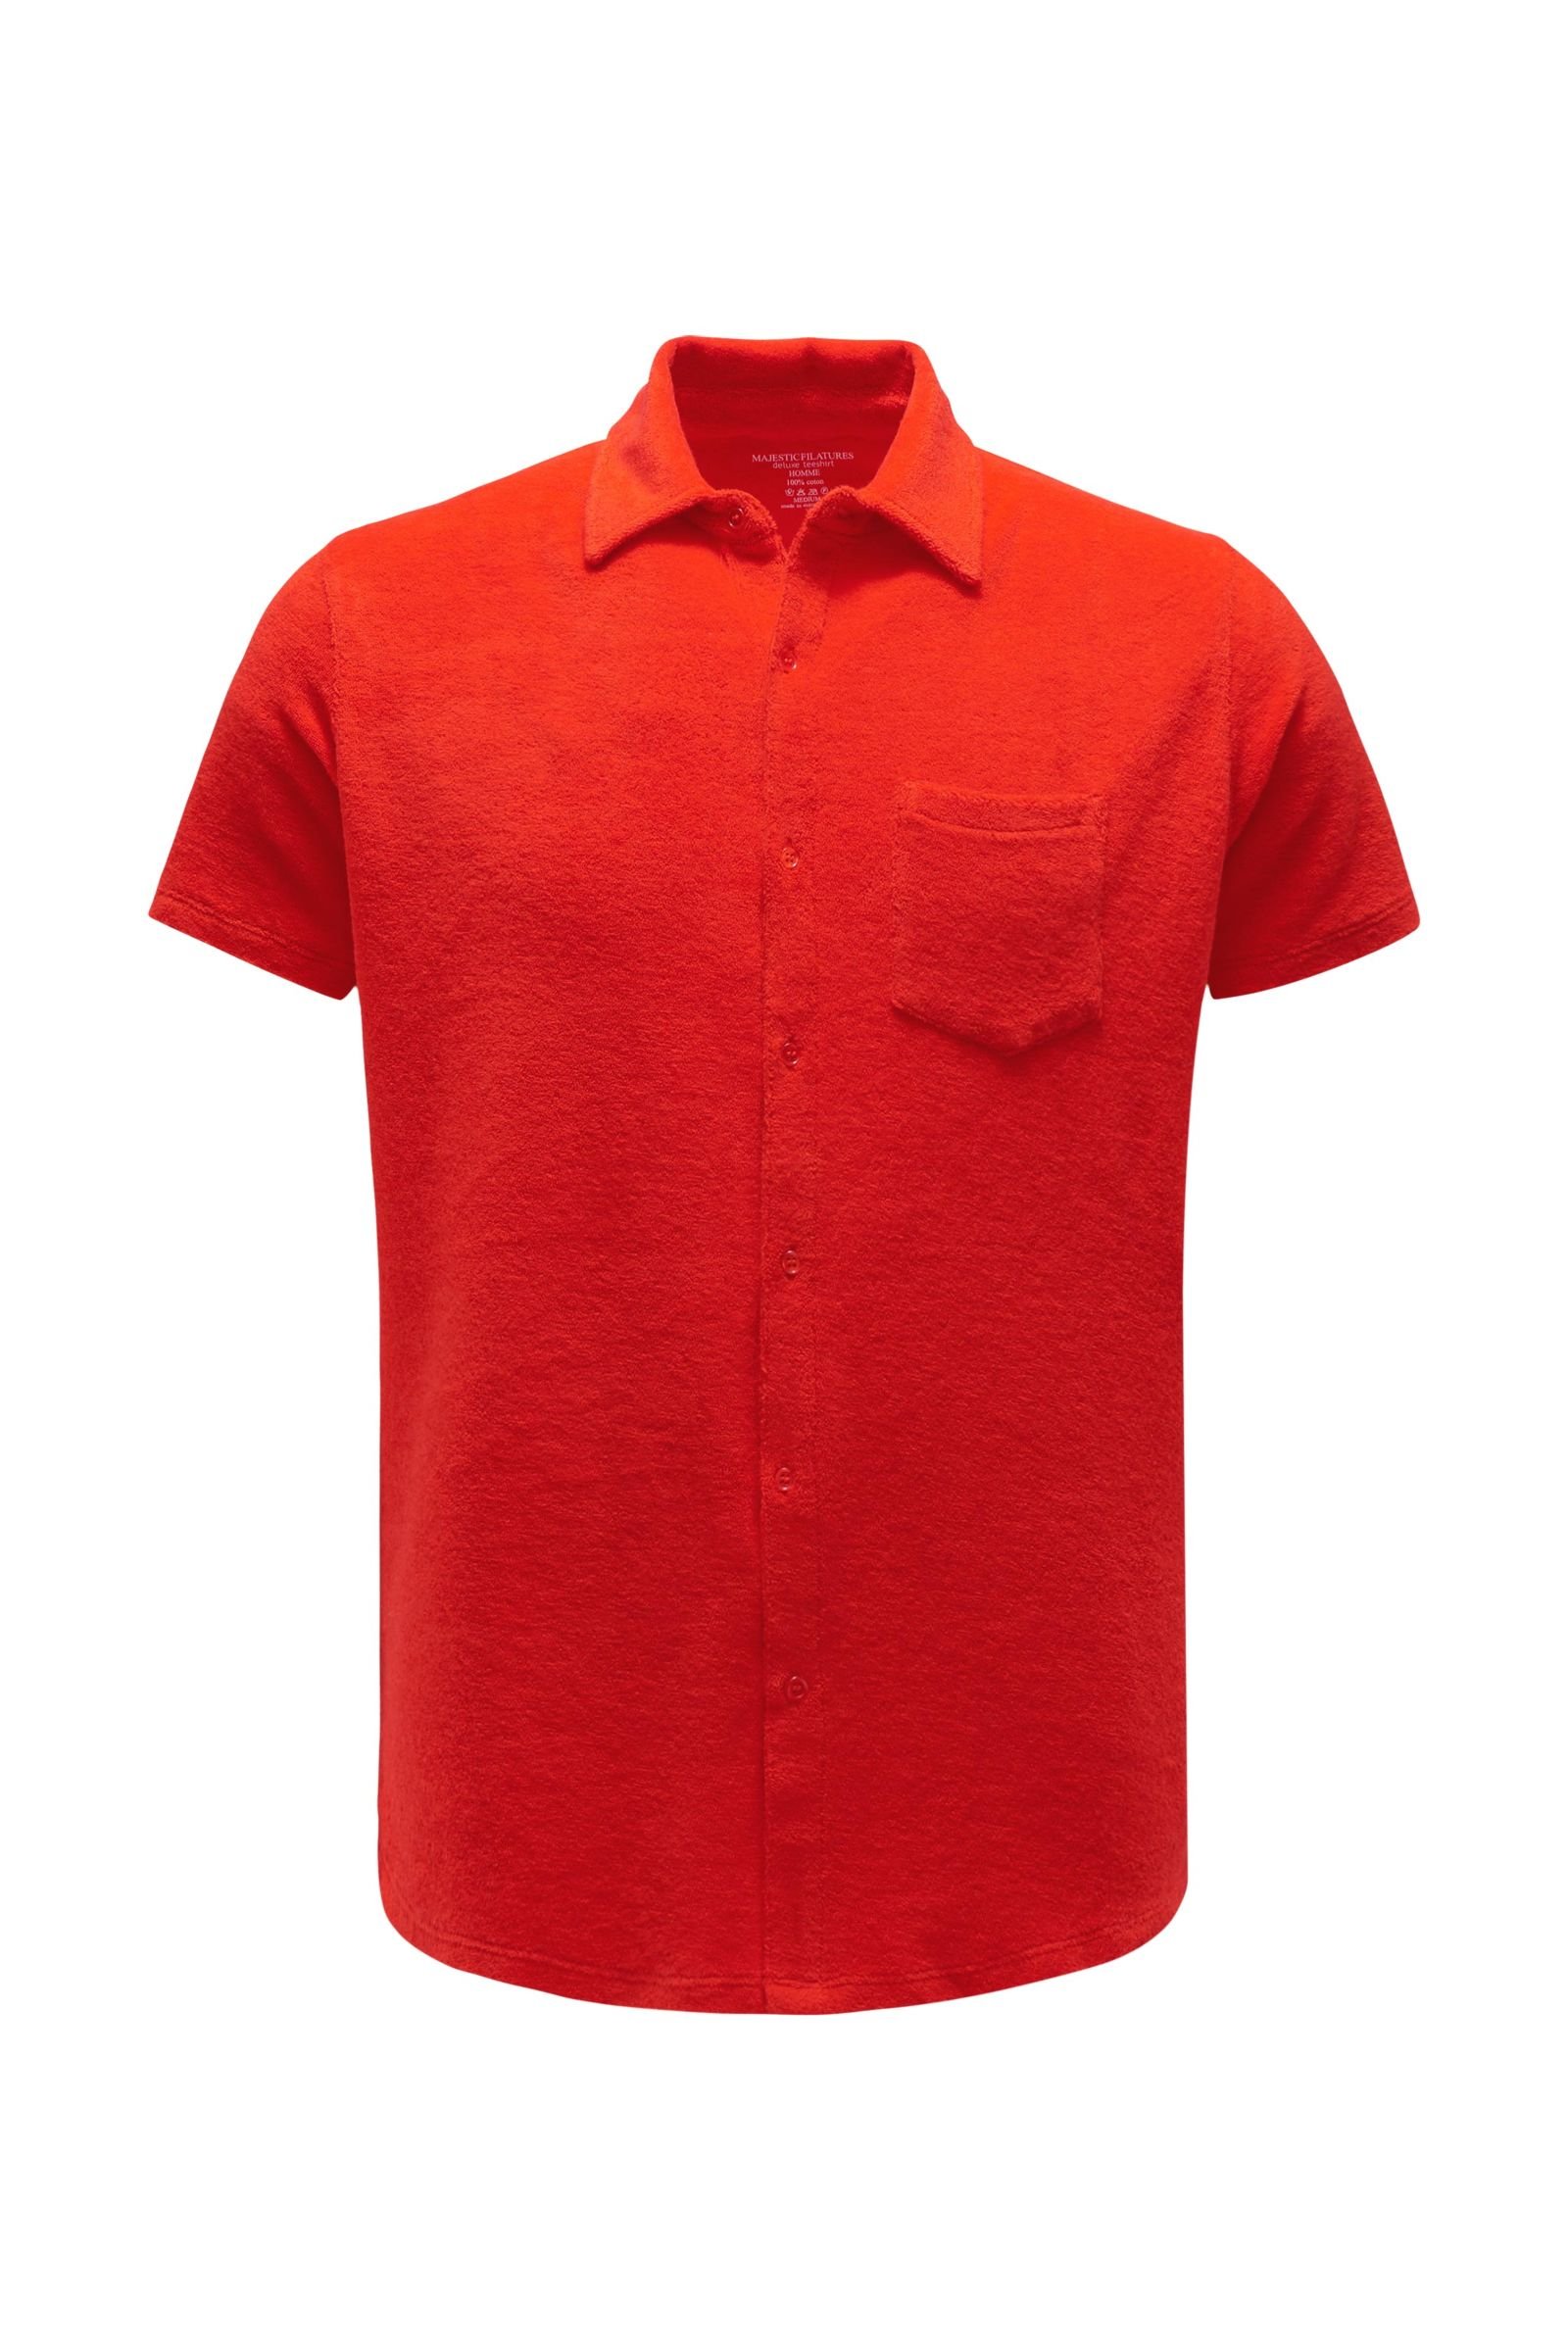 Terry short-sleeve shirt red